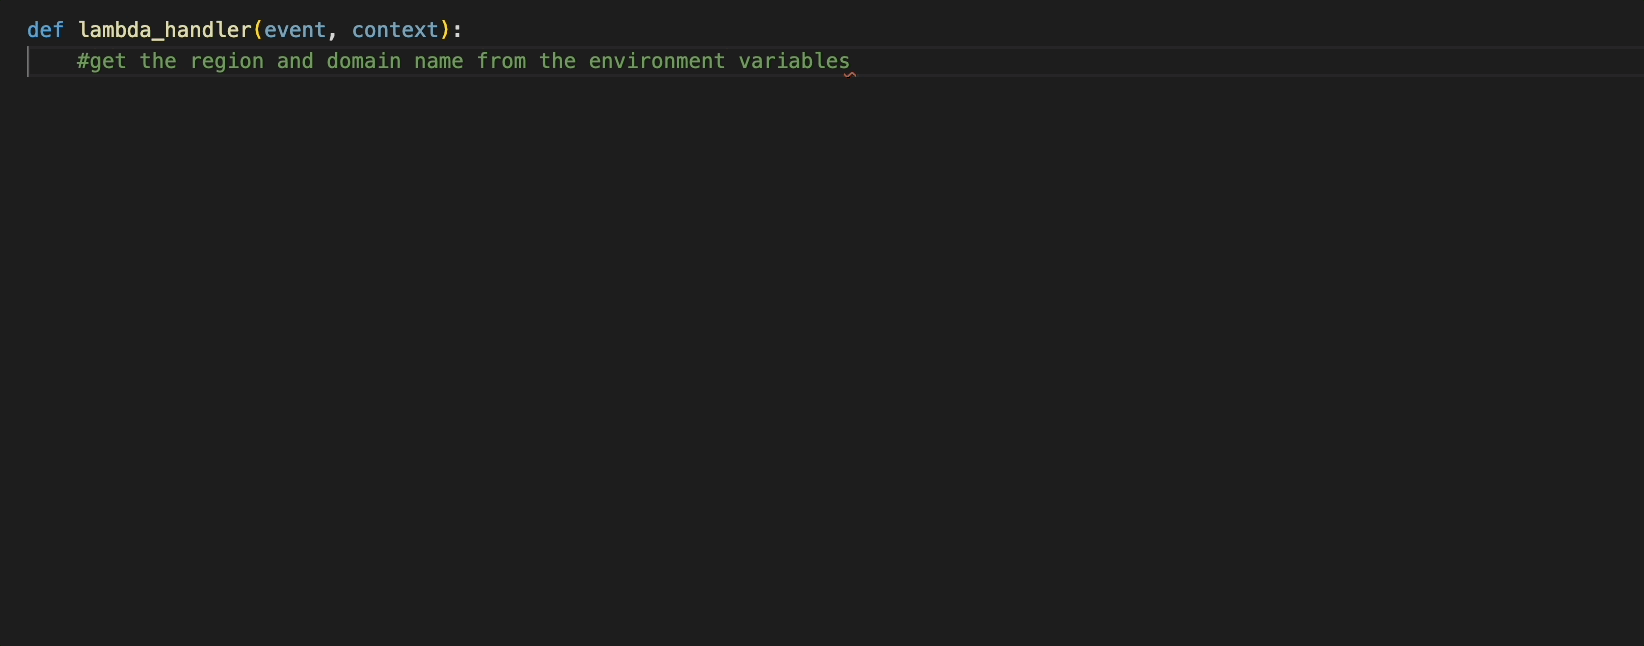 Code generated for an AWS Lambda function handler.